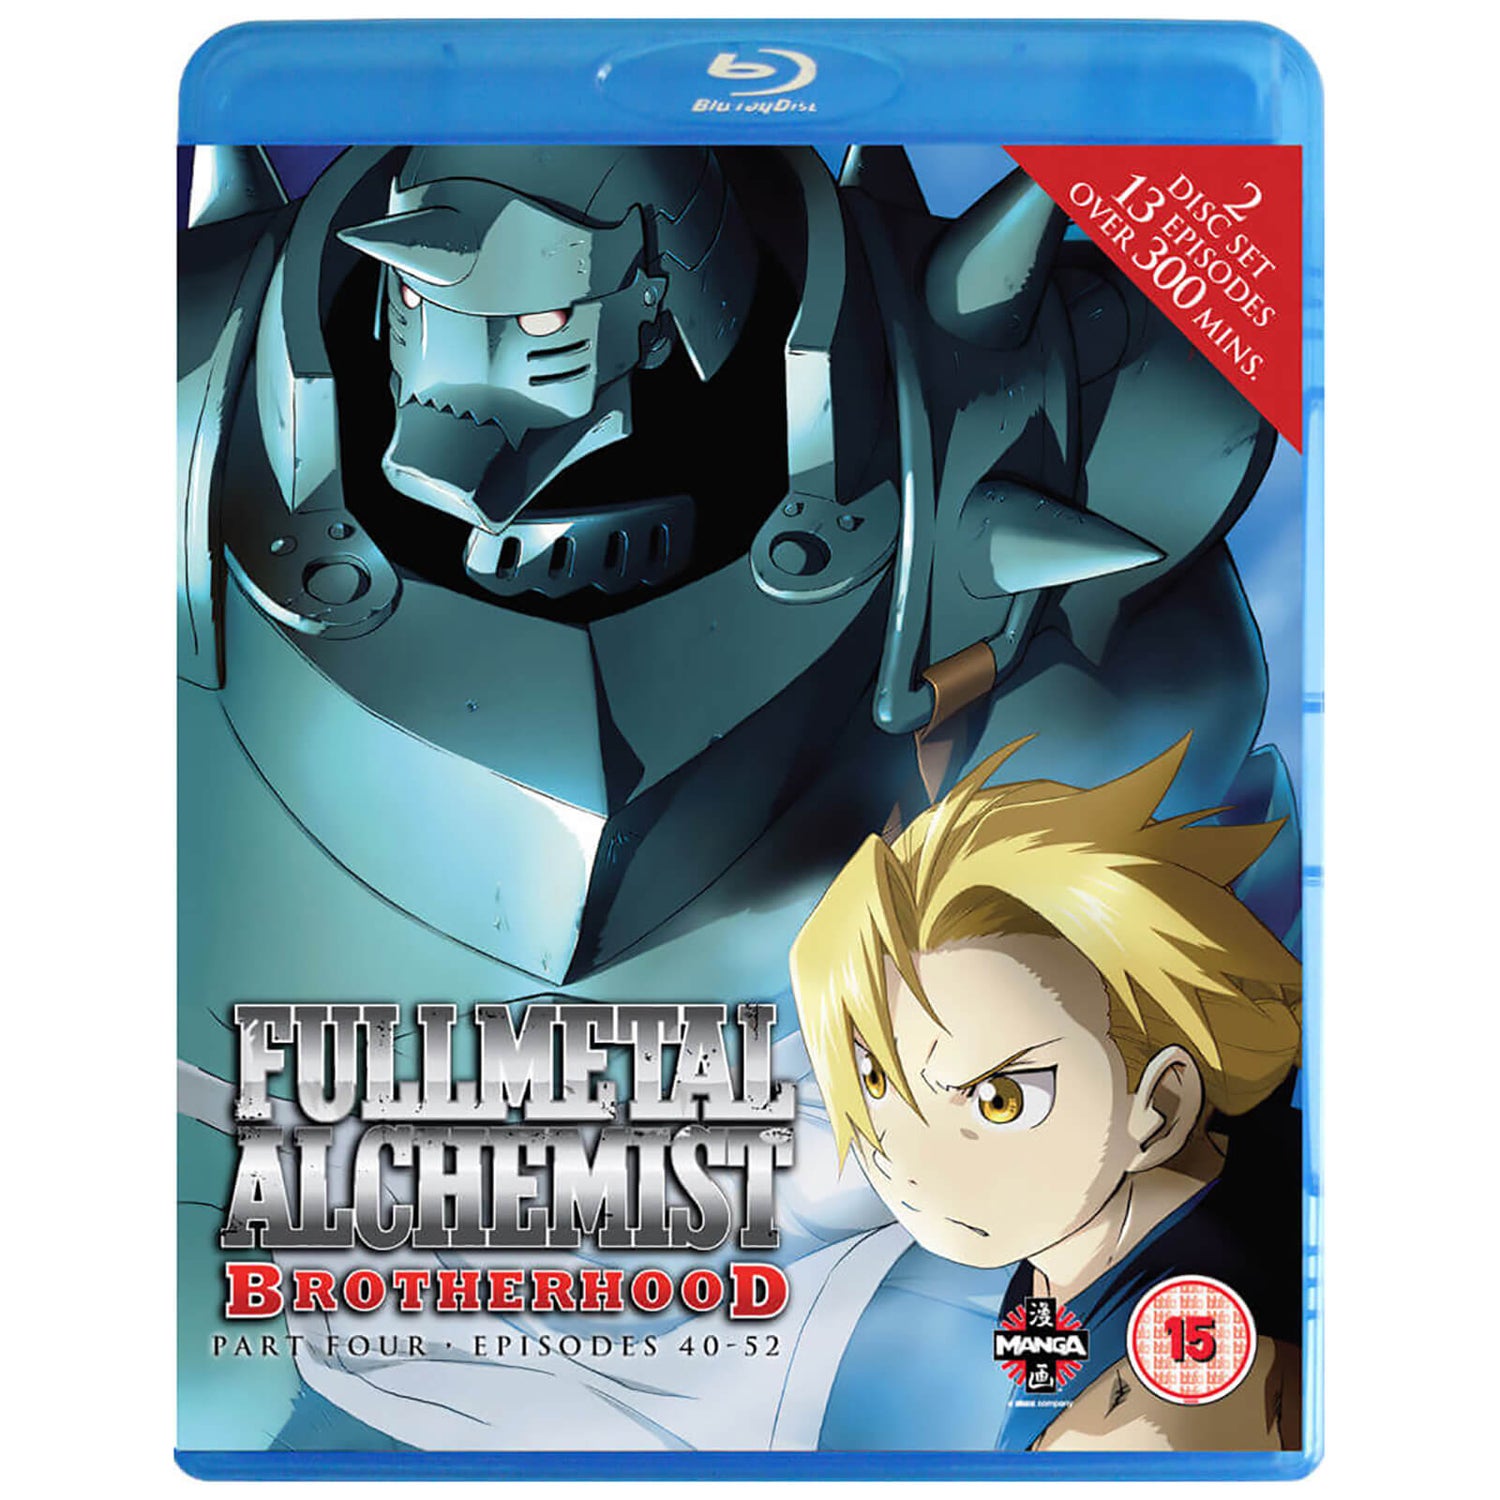 Fullmetal Alchemist Brotherhood - Part 4: Episodes 40-52 Blu-ray - Zavvi UK